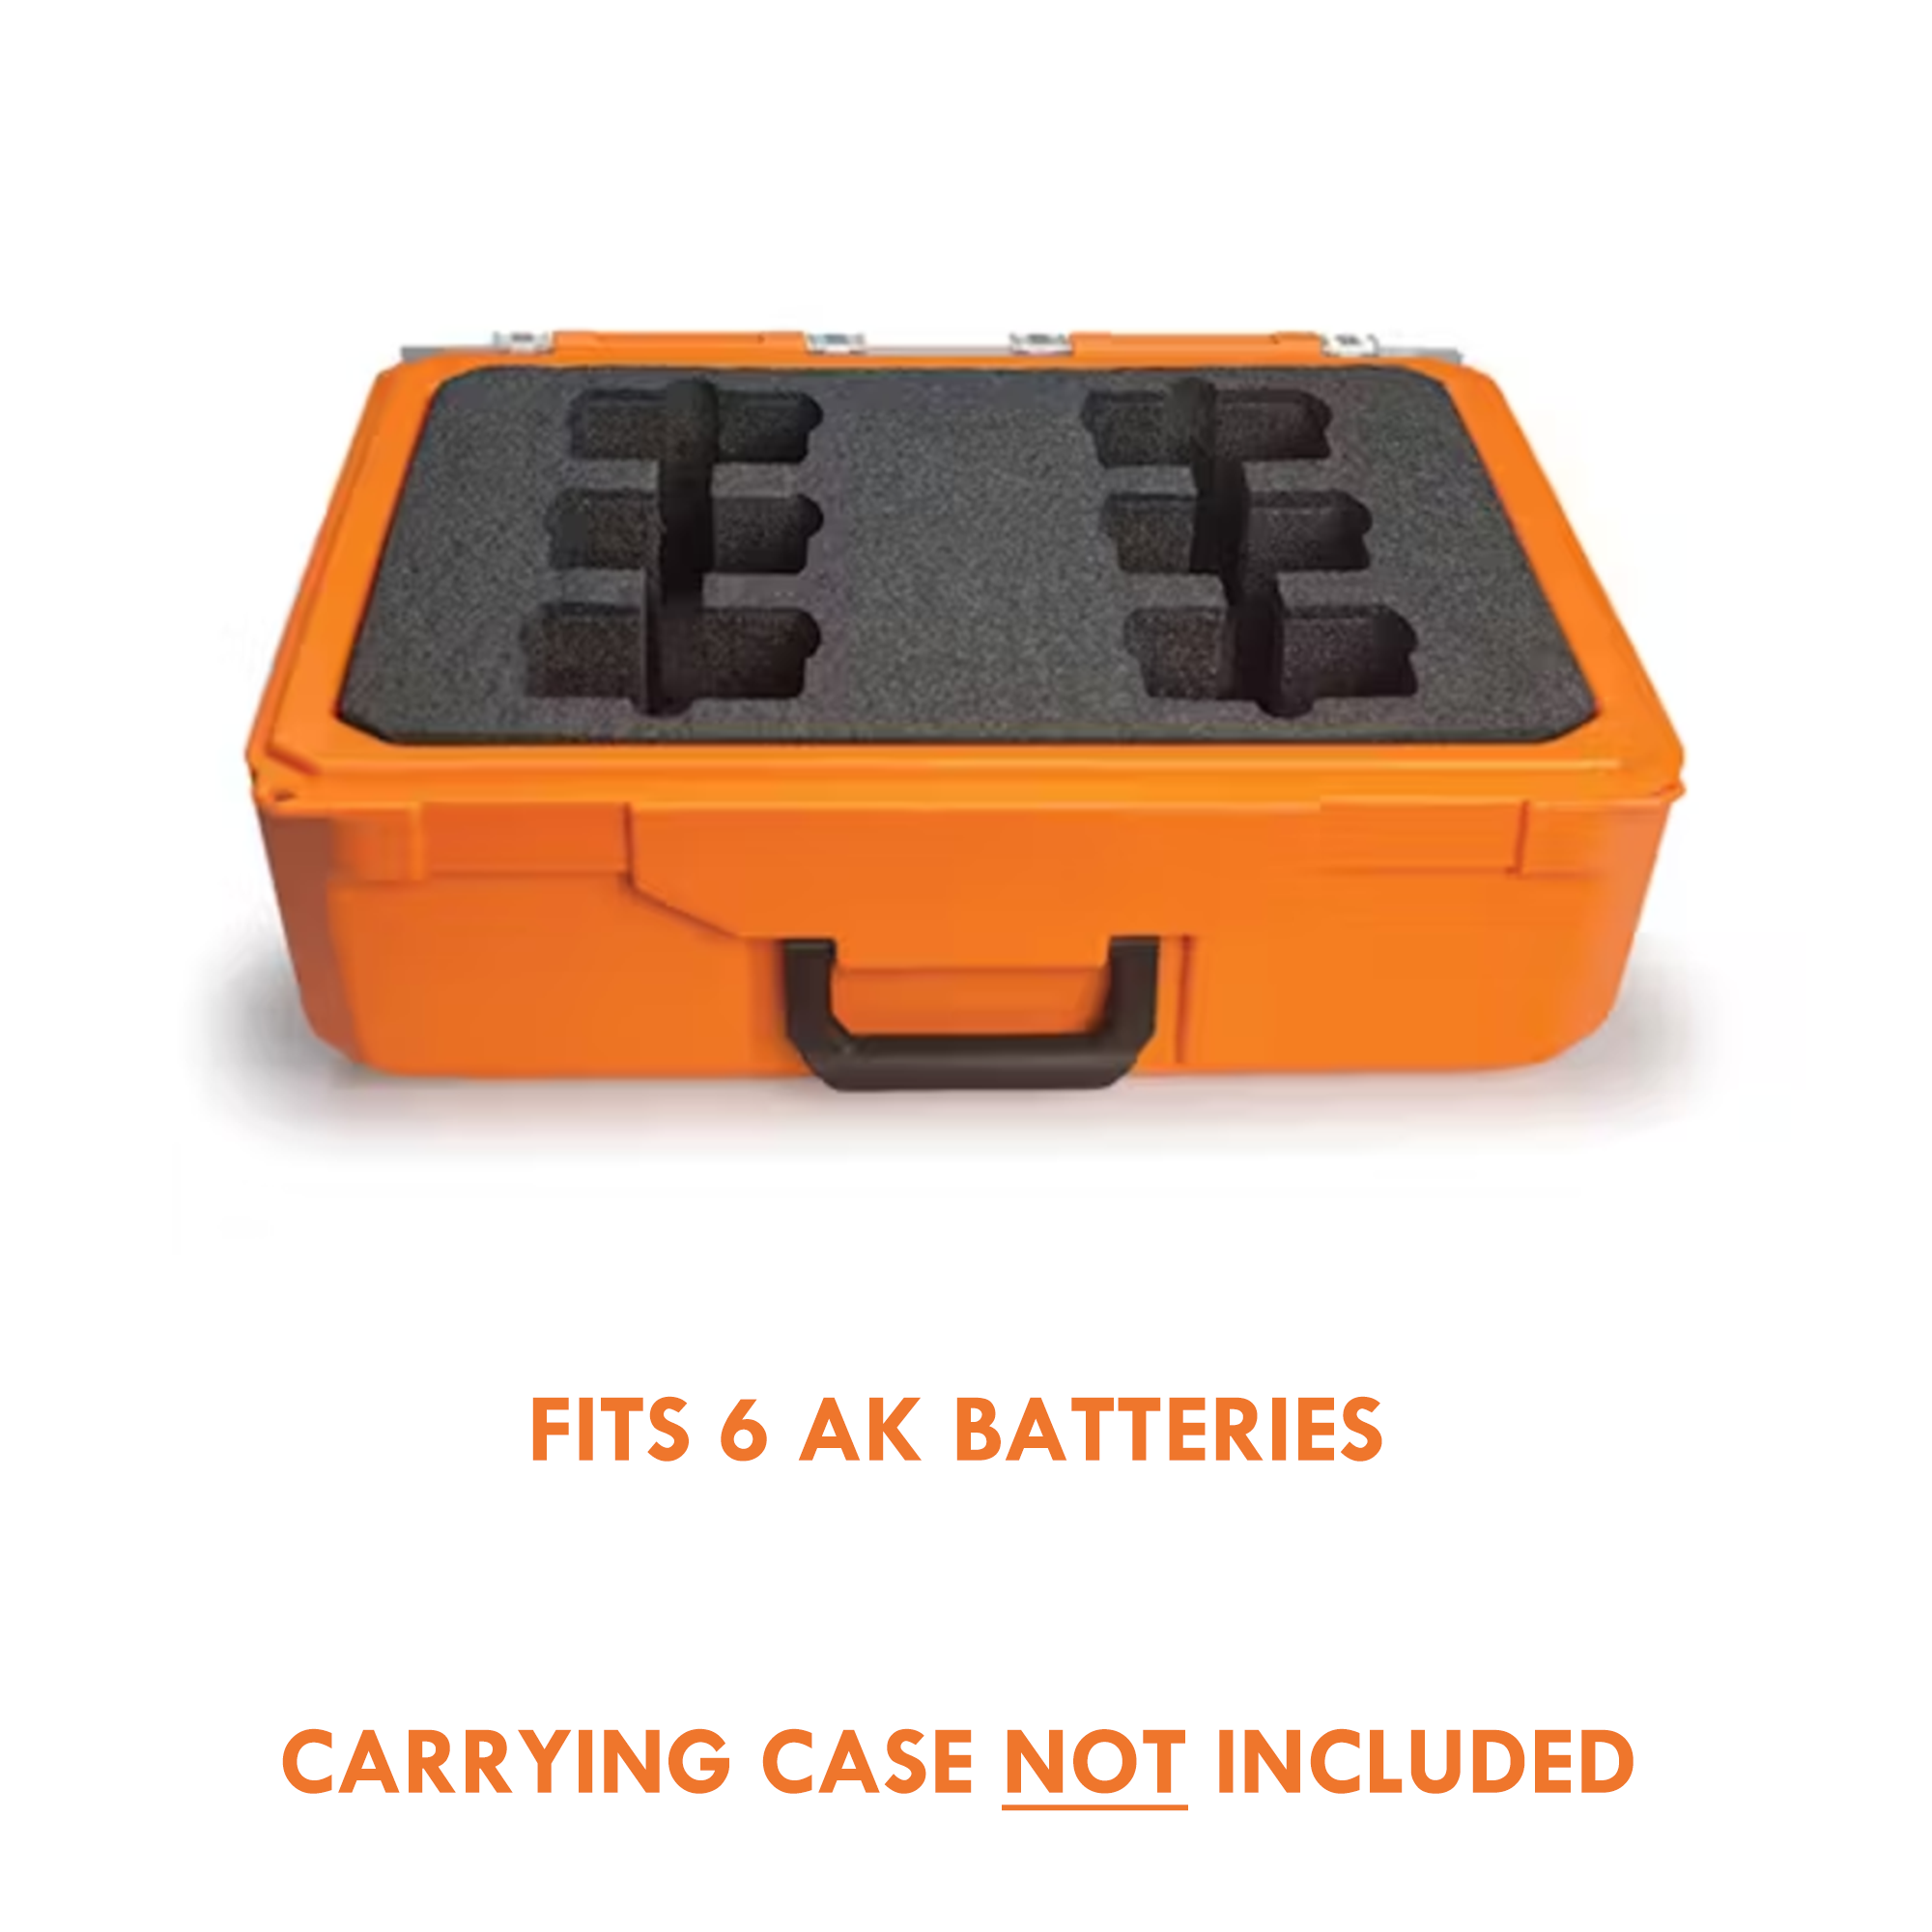 Stihl Battery Case Insert Fits 6 AK batteries | 7010 871 0031